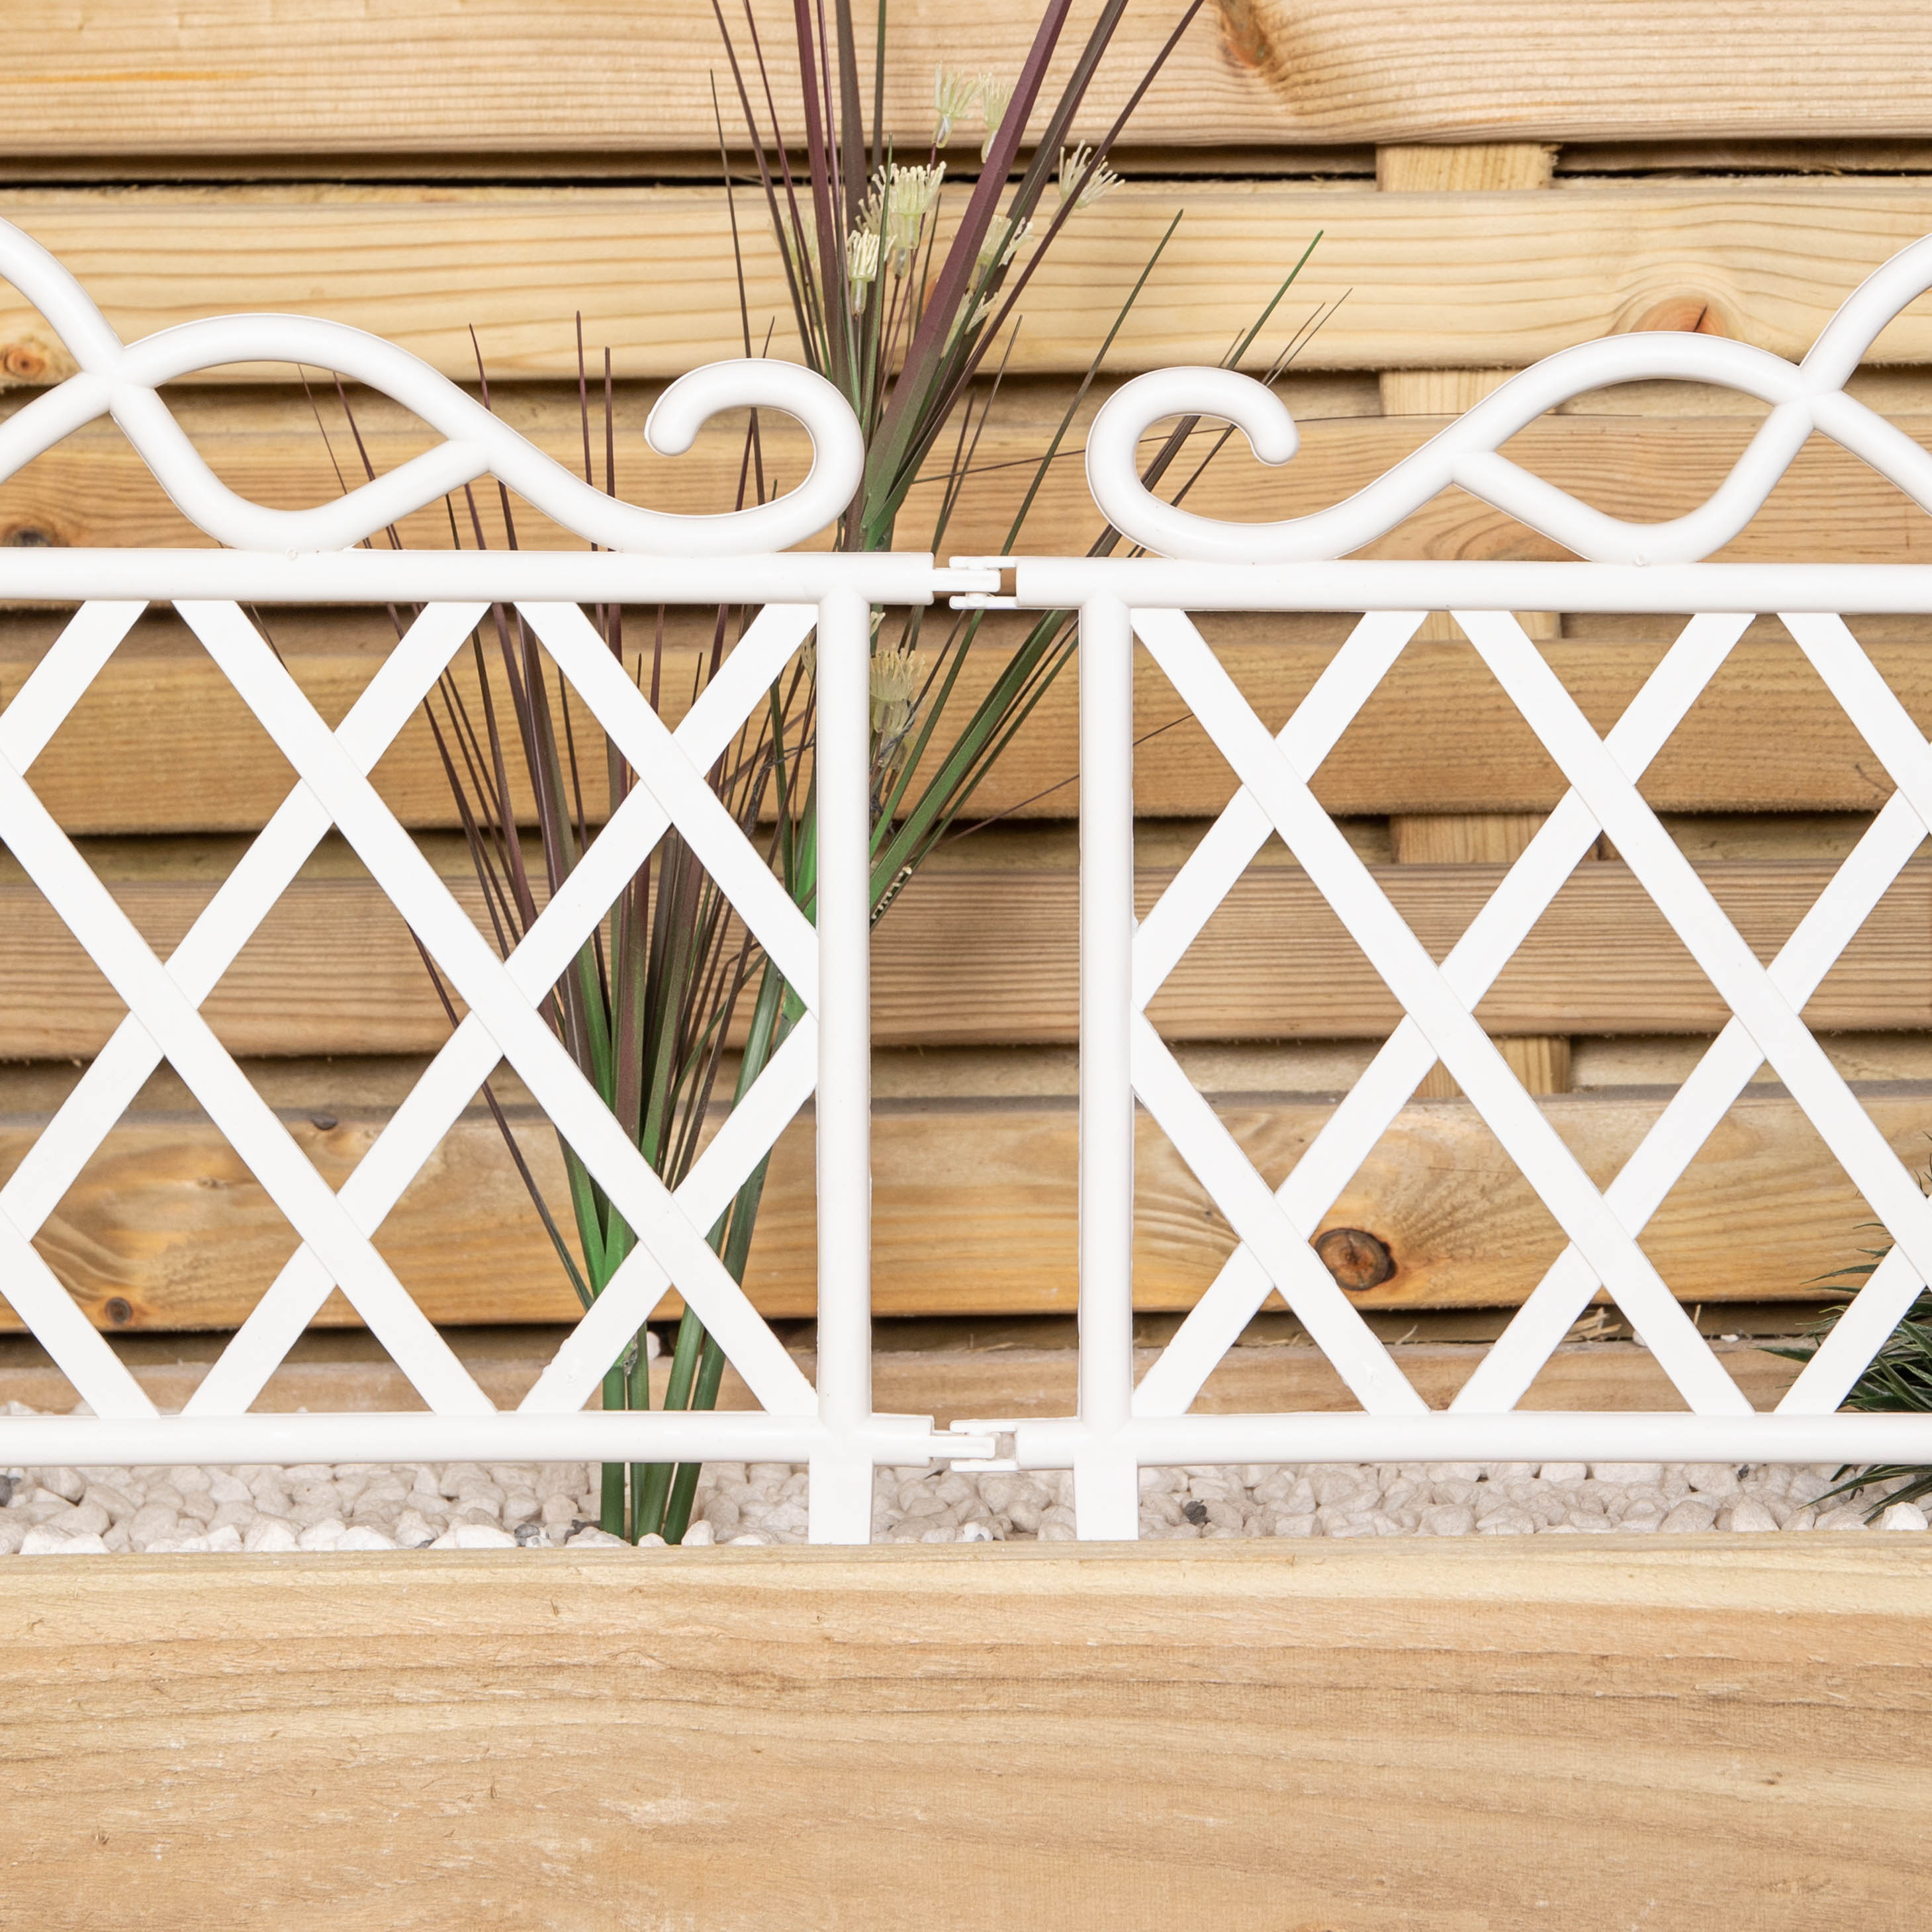 Pack of 3 27cm White Plastic Garden Patio Lawn Border Fence Edging